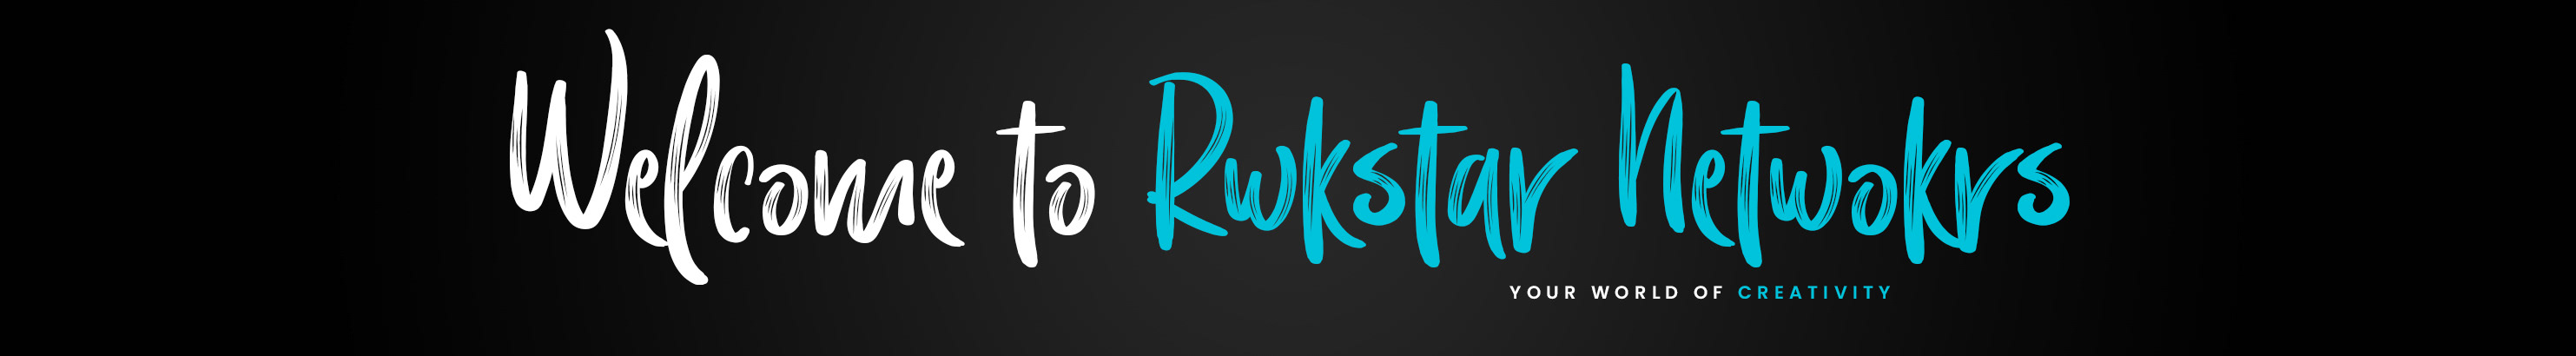 Баннер профиля Rwkstar Networks